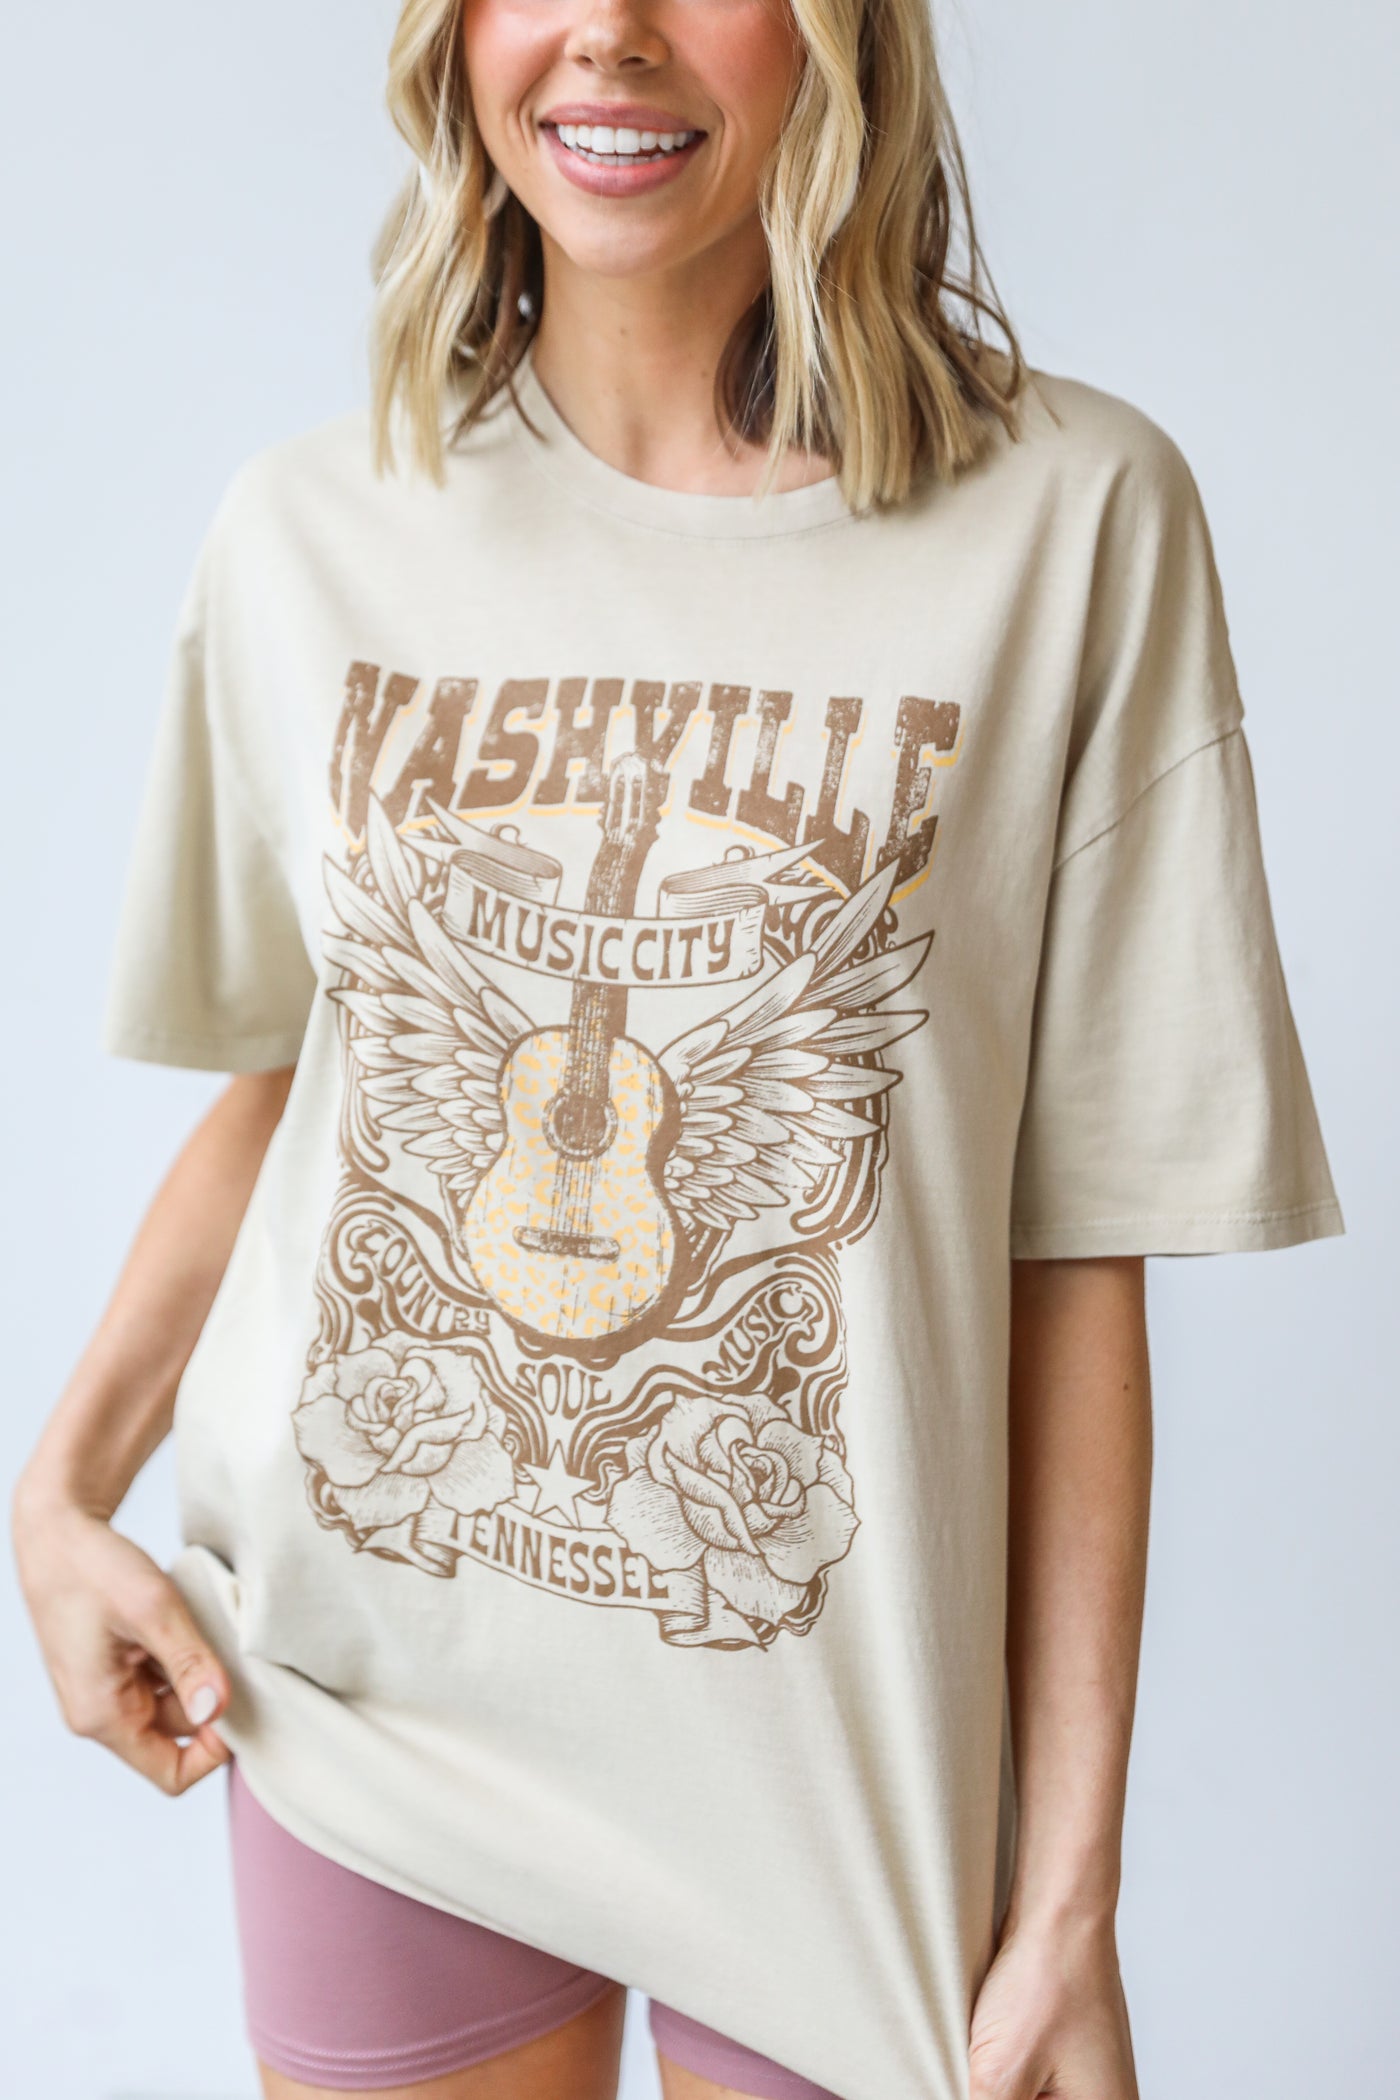 Nashville Music City Graphic Tee close up